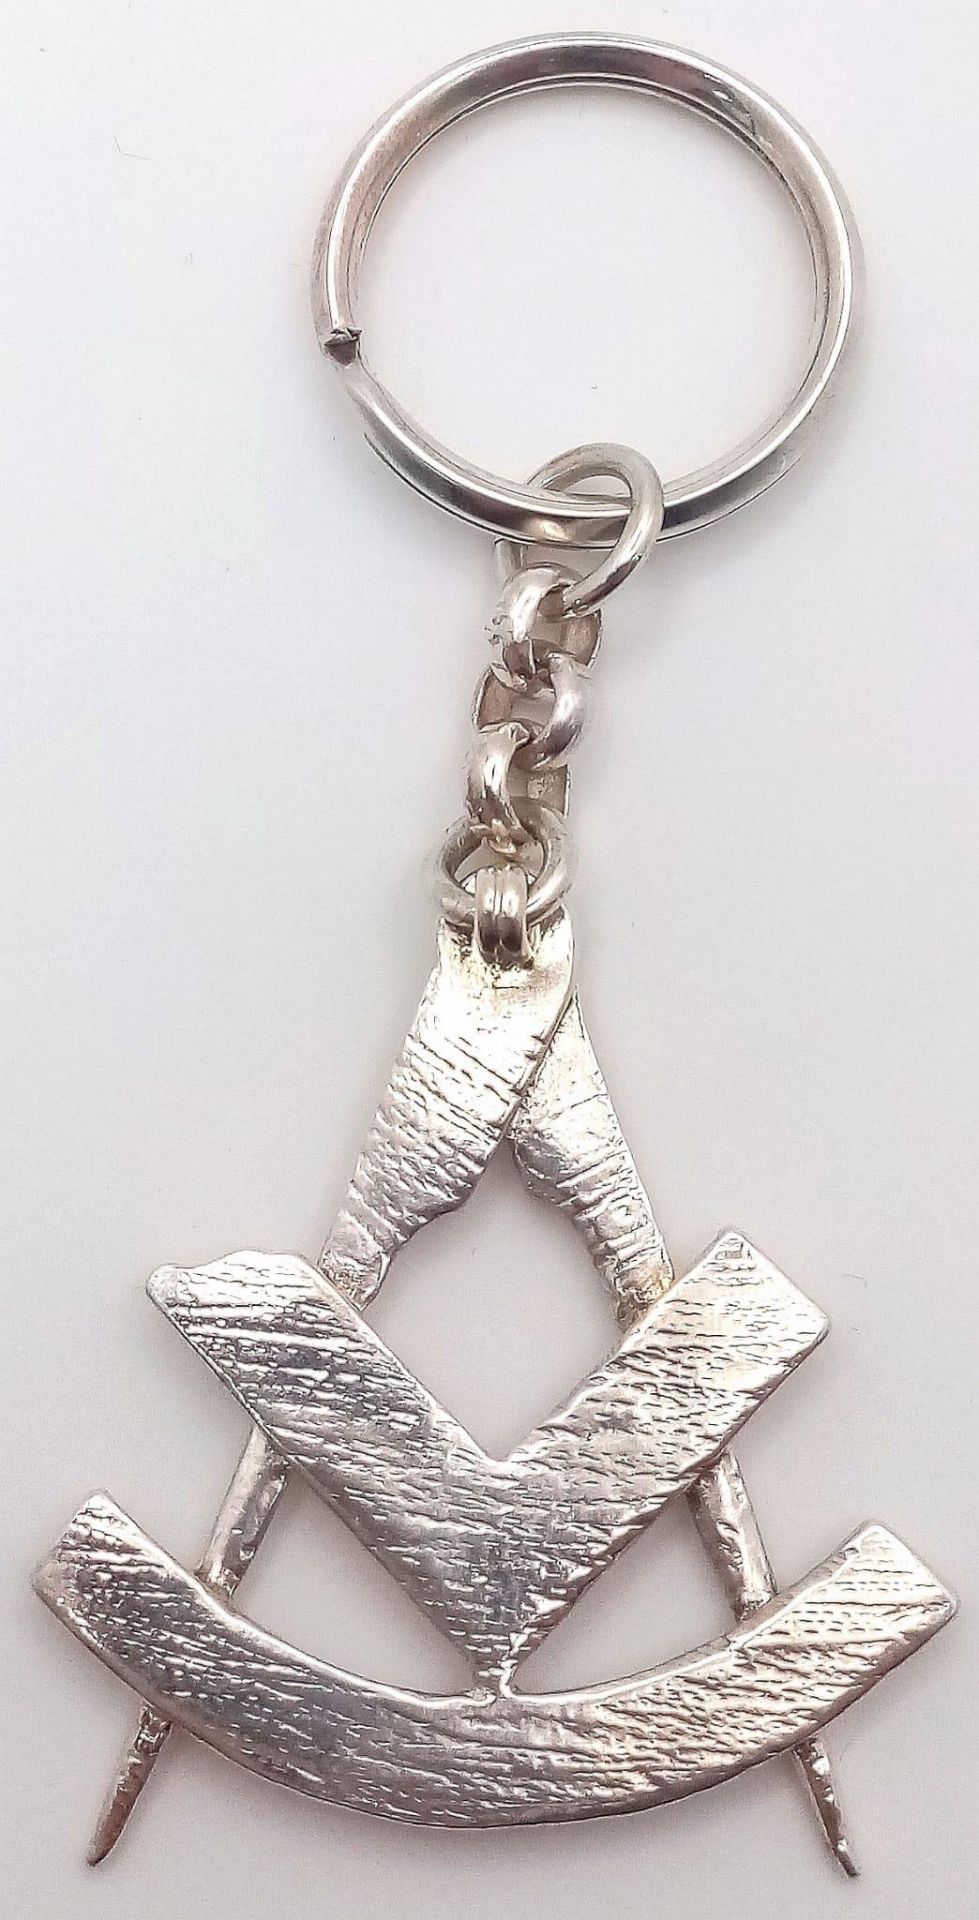 A Masonic Symbol Sterling Silver Key Chain. 6cm x 4cm. 15g - Image 2 of 3